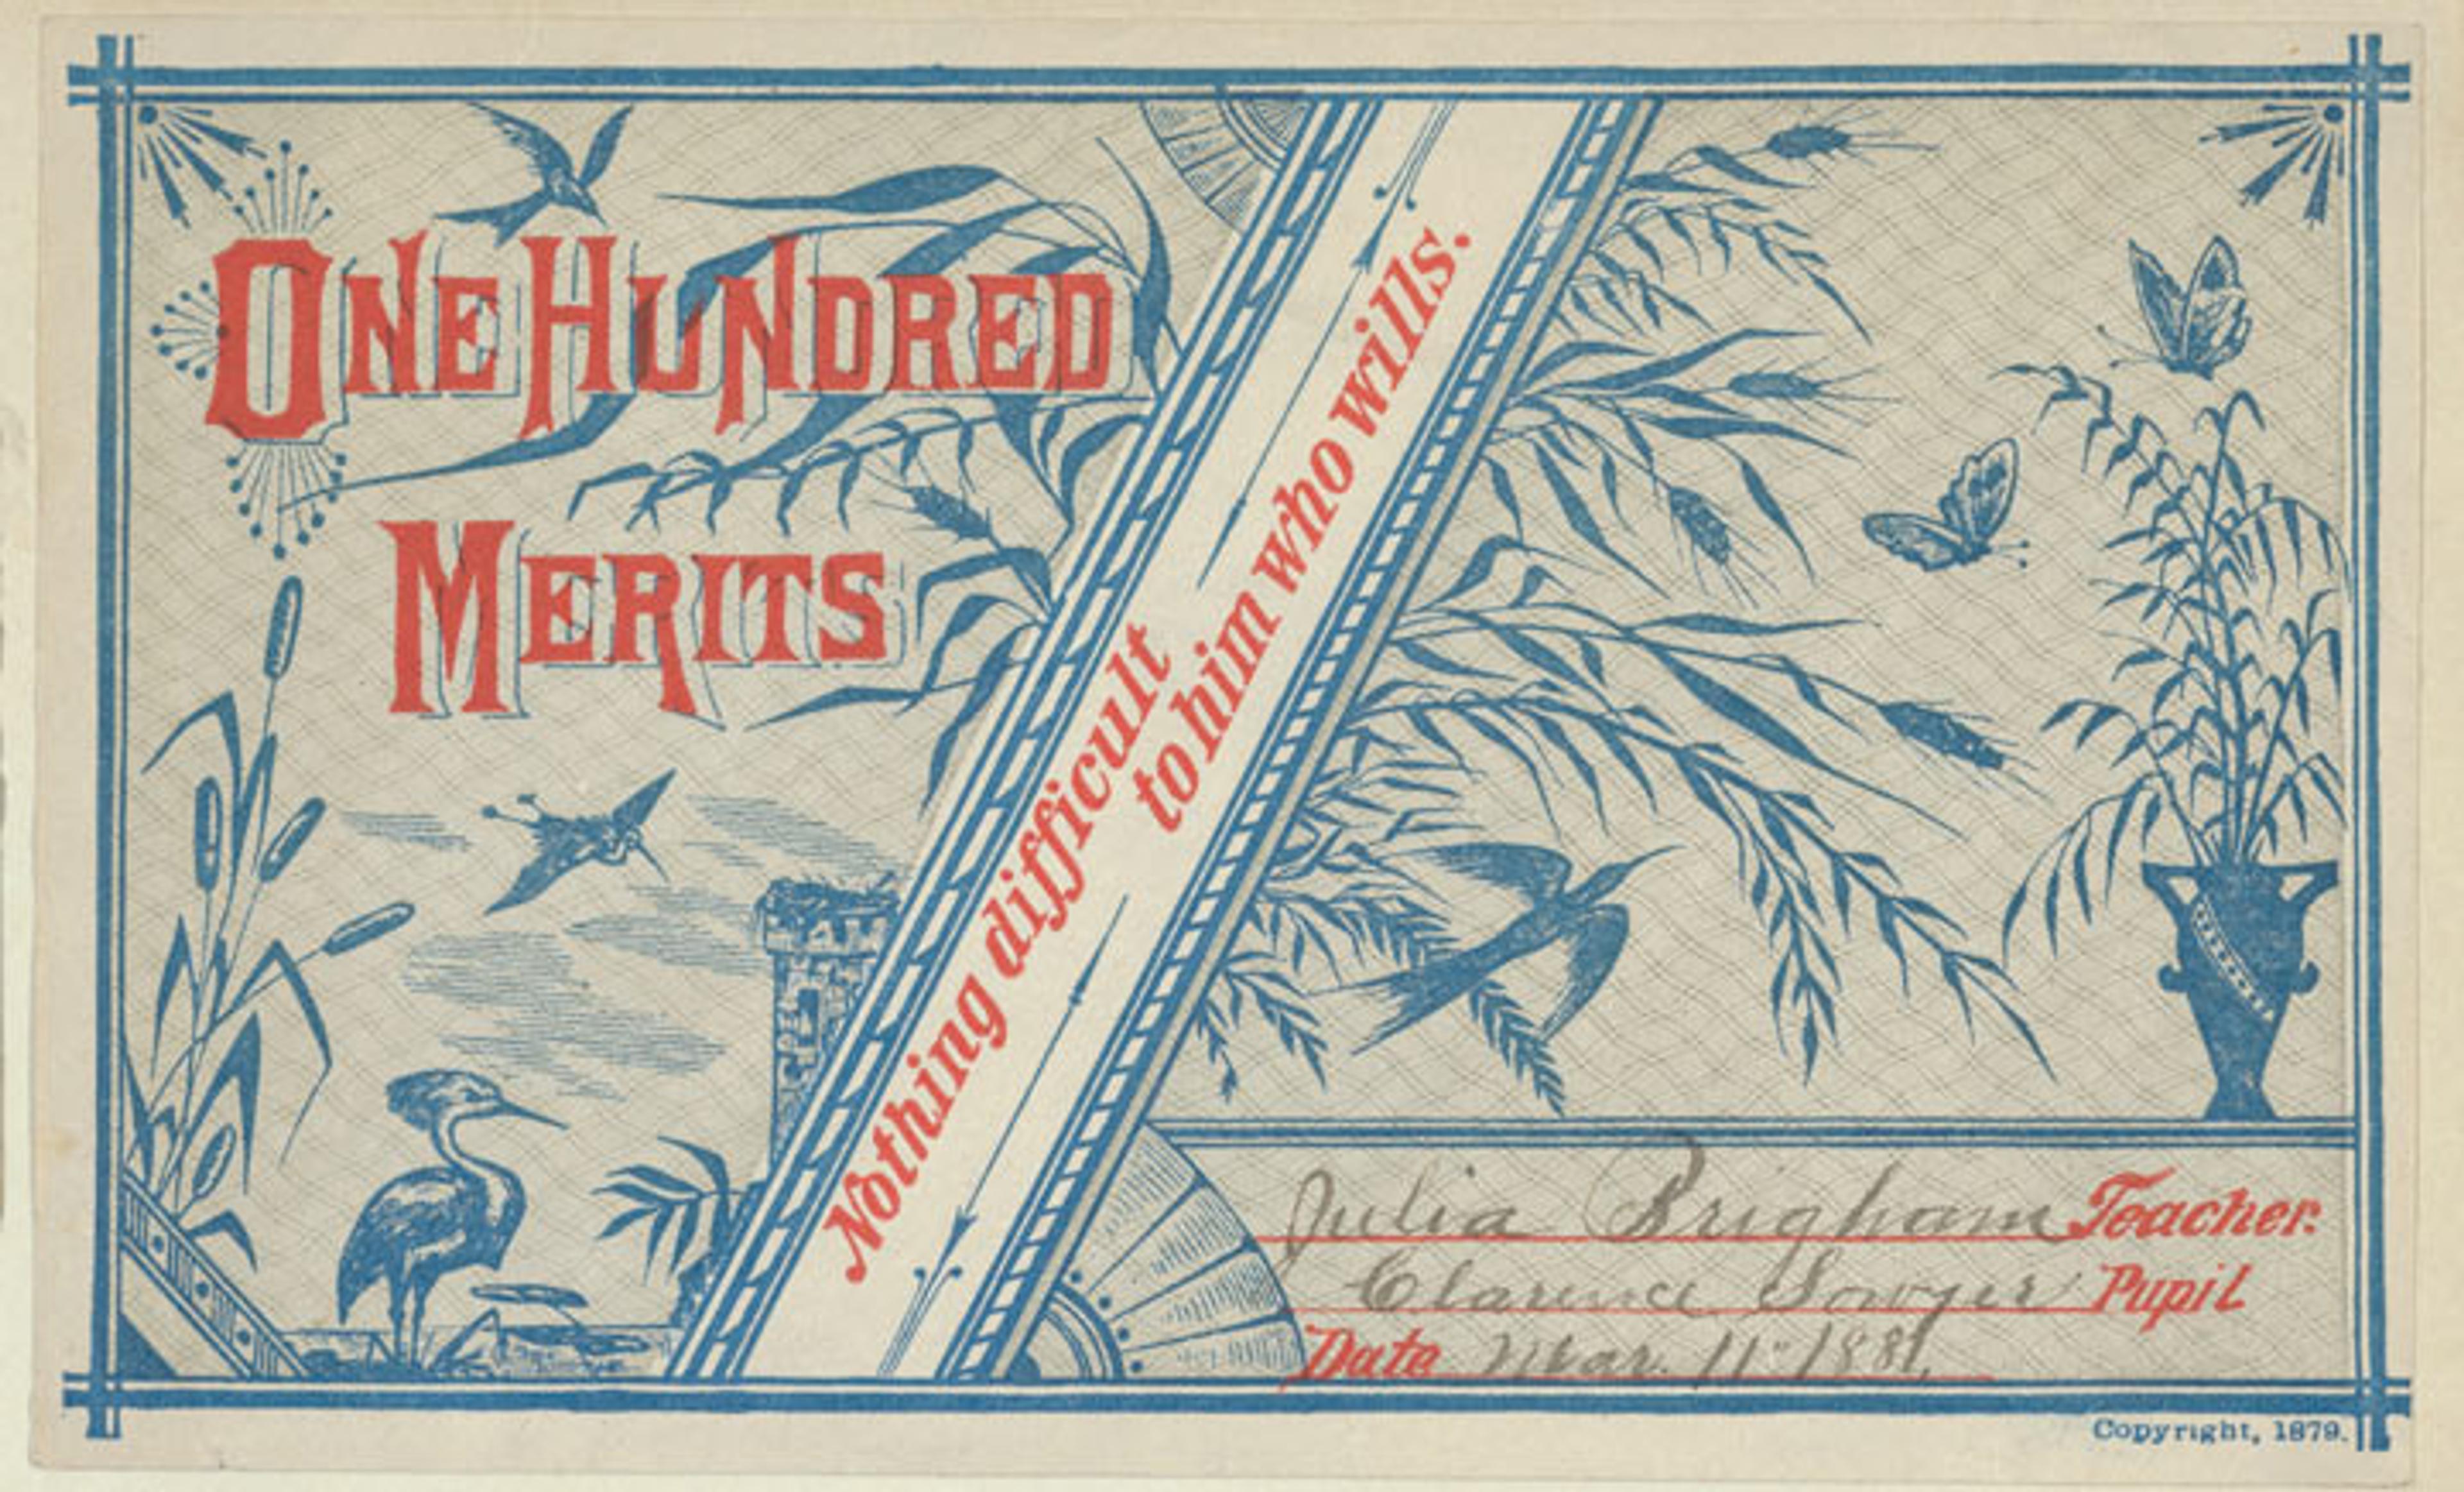 Vintage commemorative card reading "One Hundred Merits"